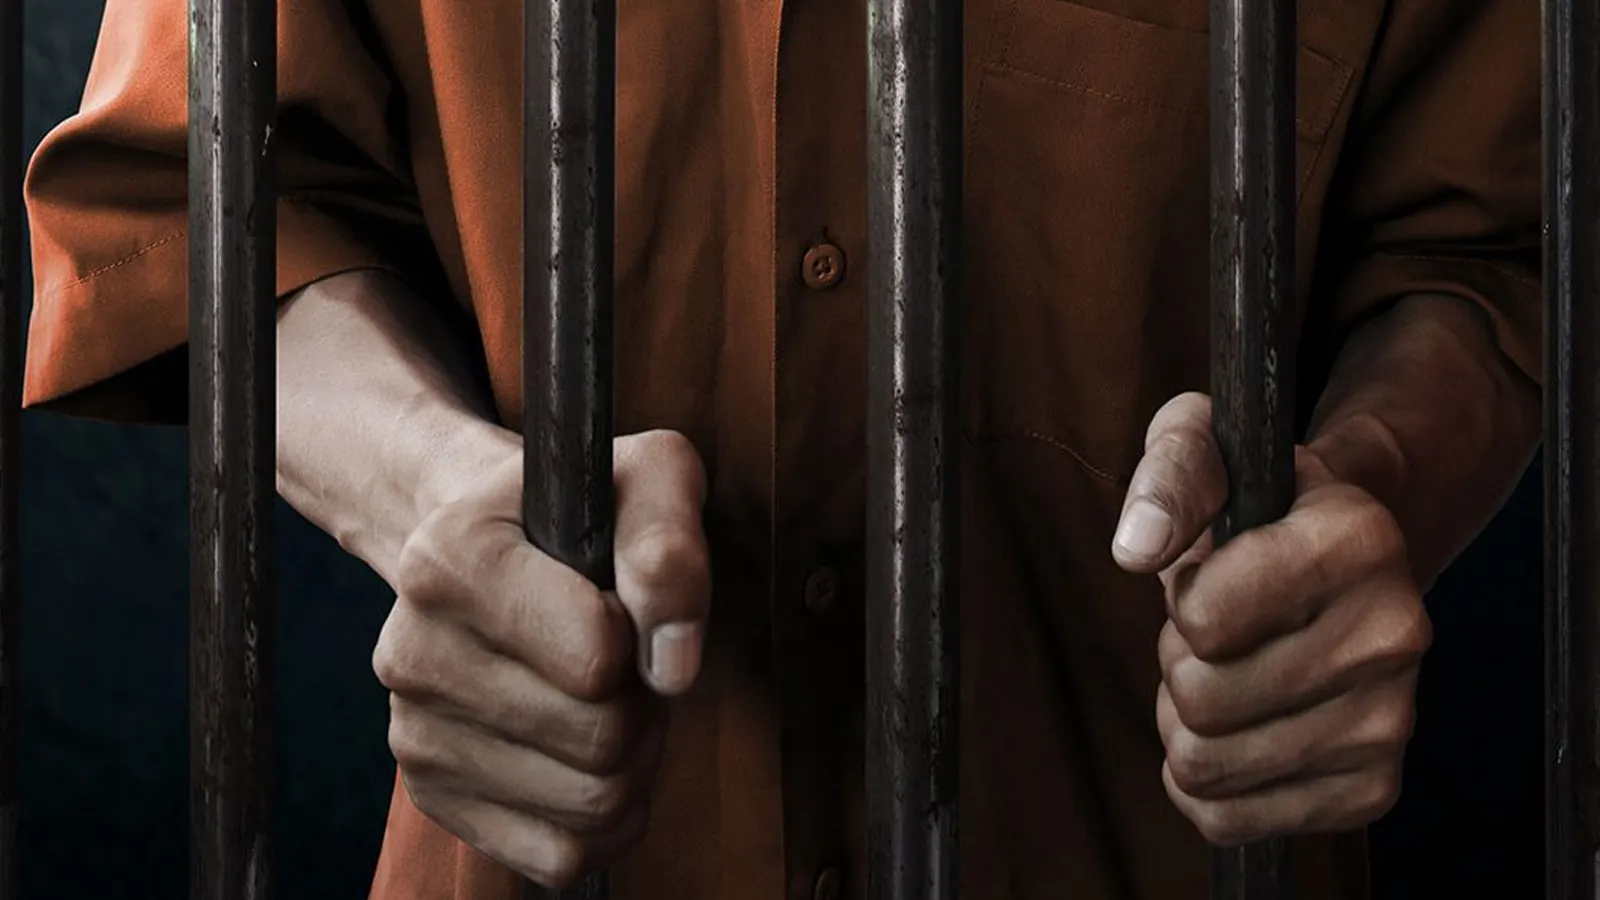 A person incarcerated behind bars.